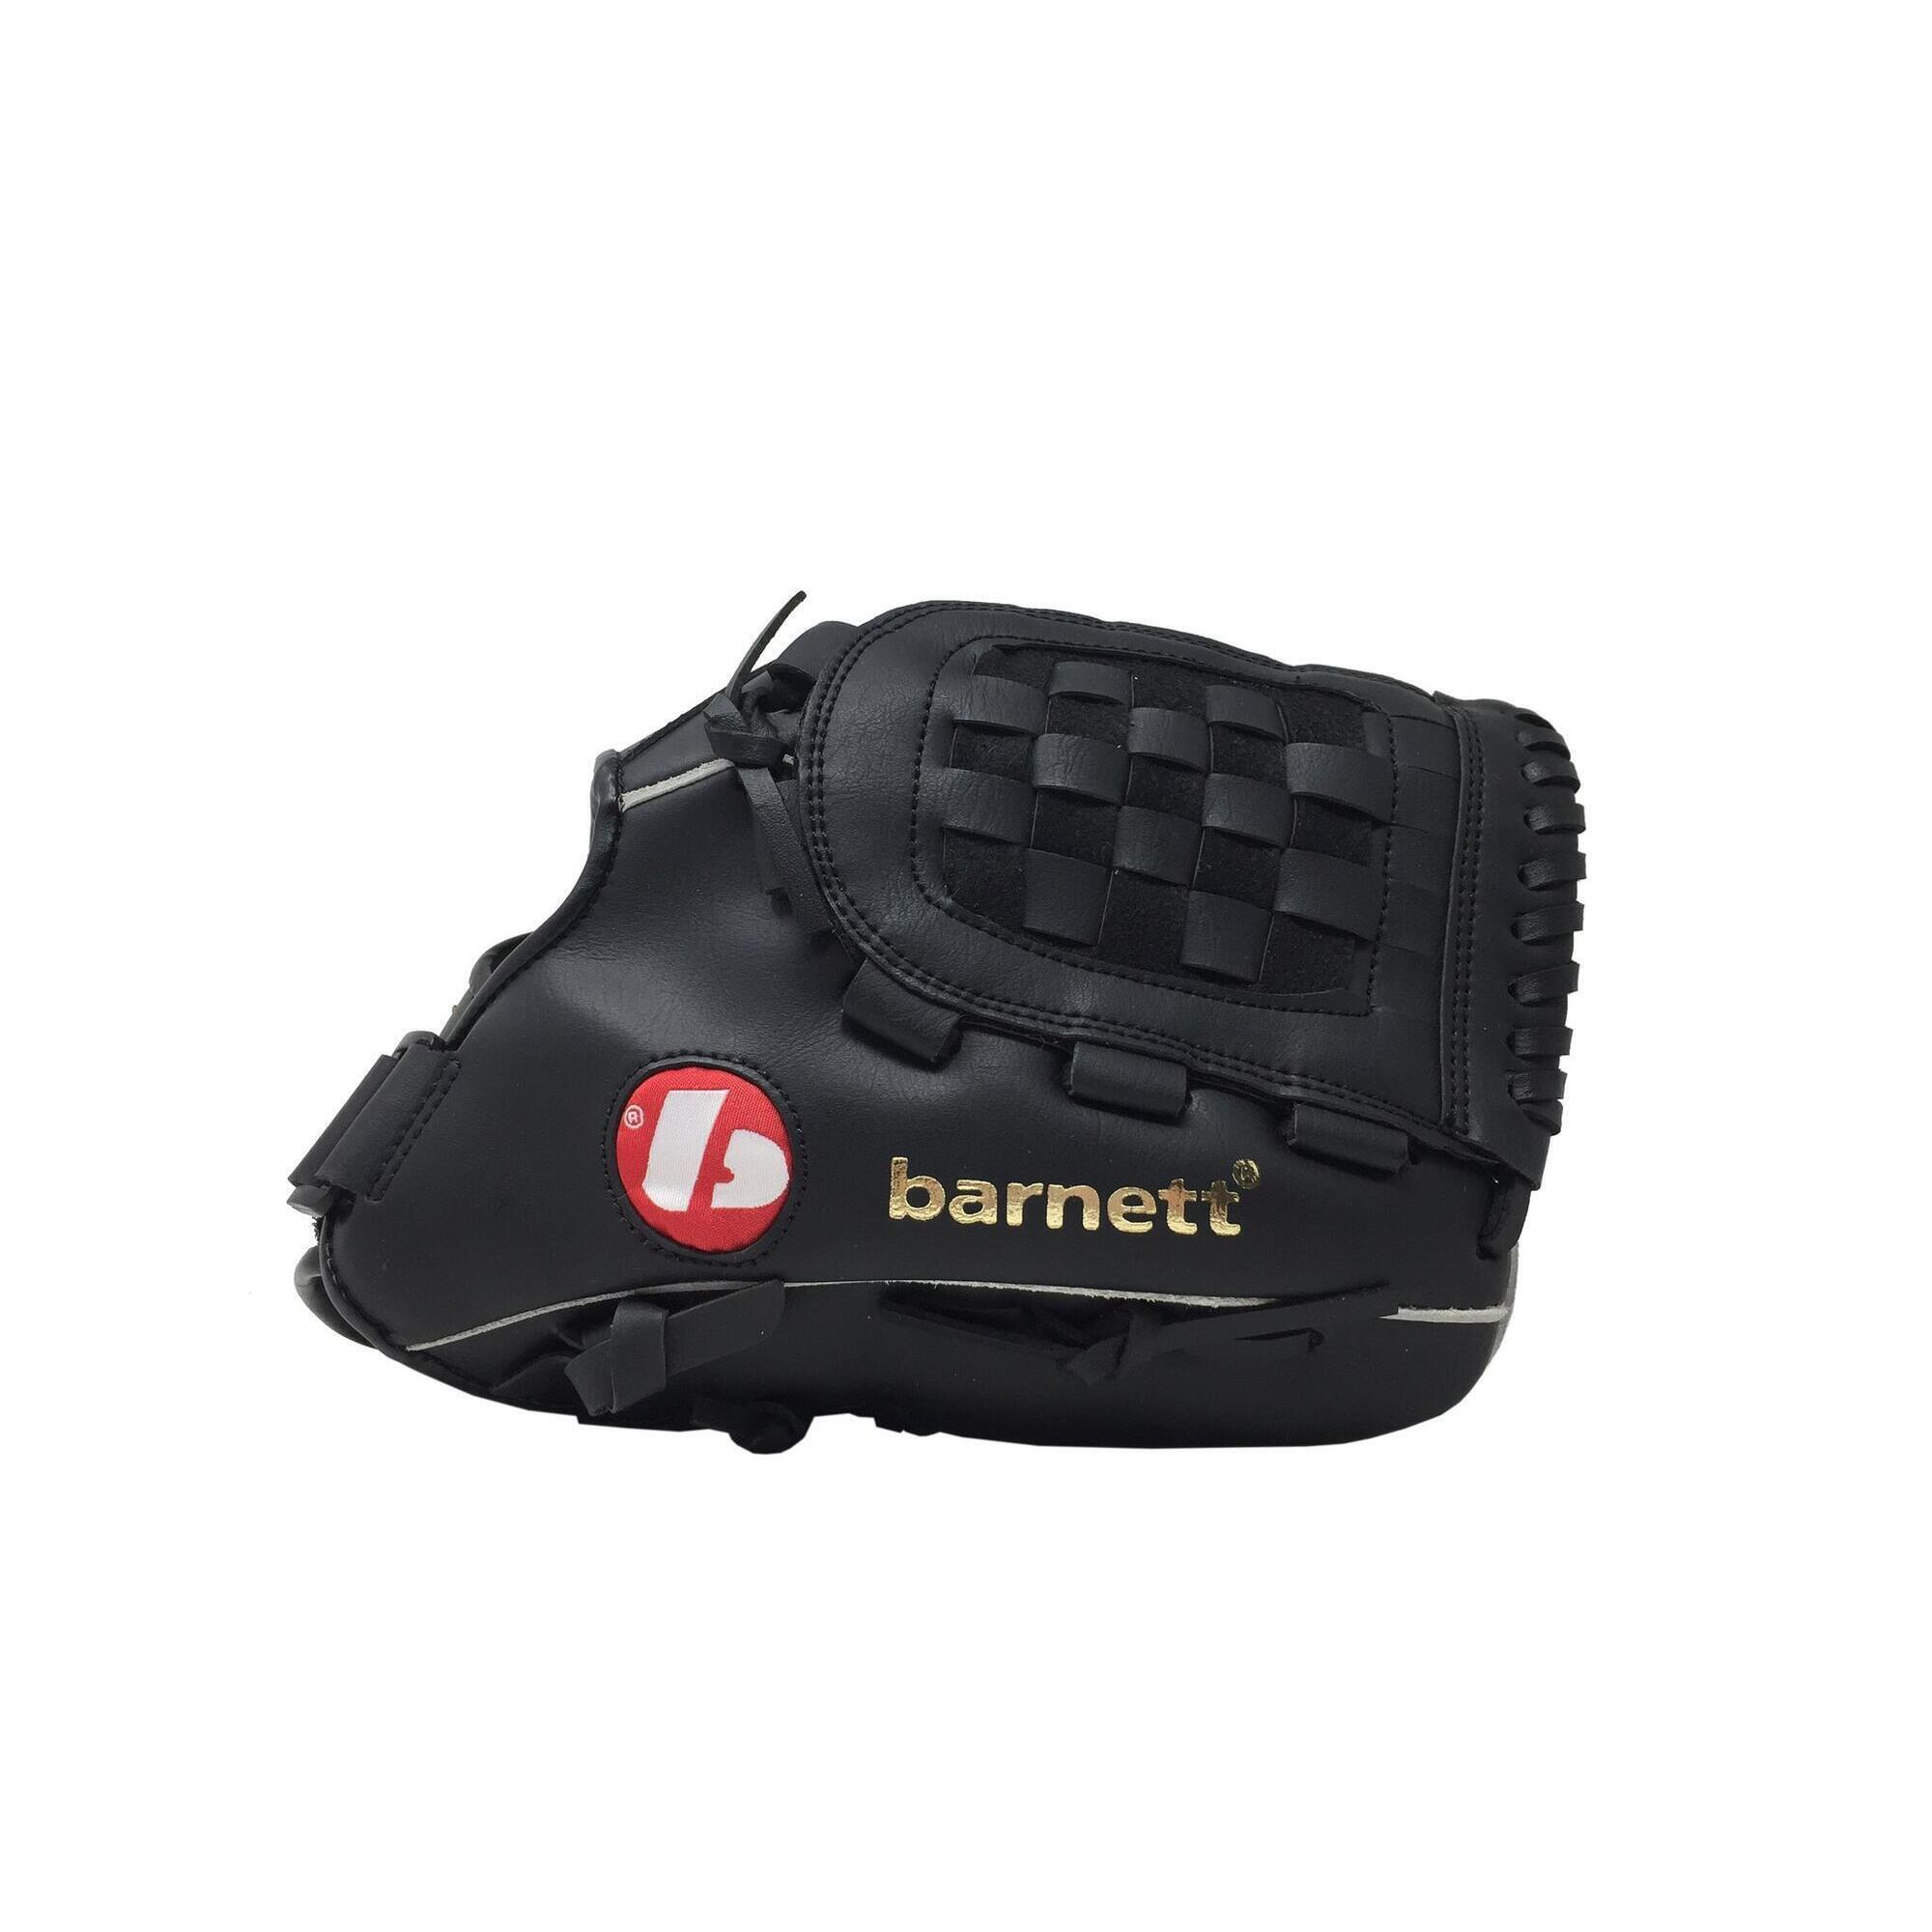 BARNETT  initiation baseball glove REG JL-120